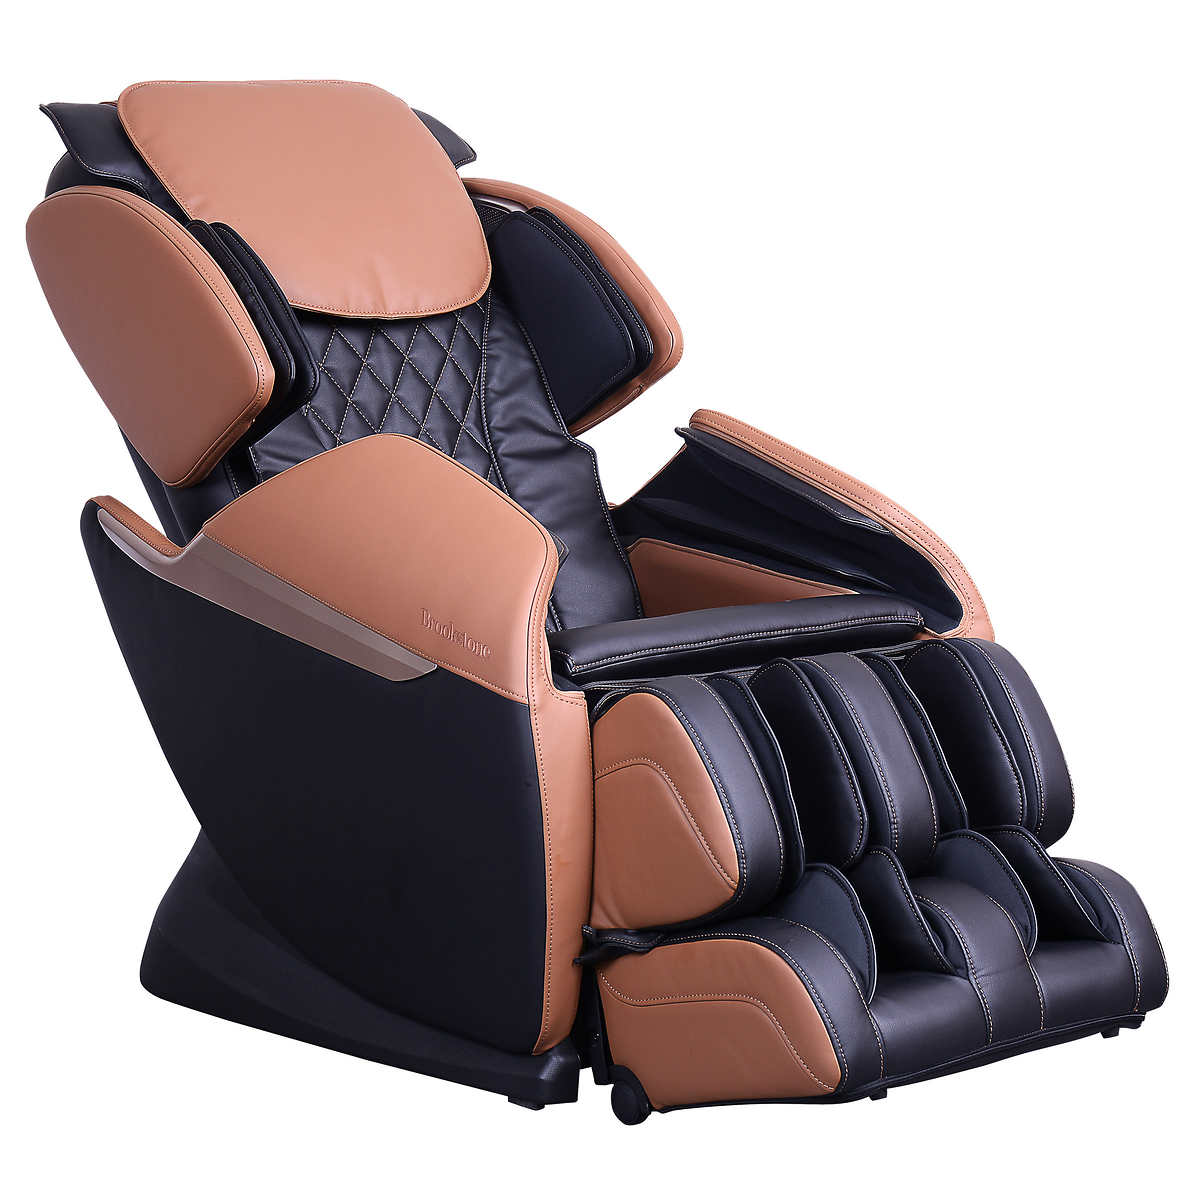 Brookstone Series 1 Zero Gravity Massage Chair Costco